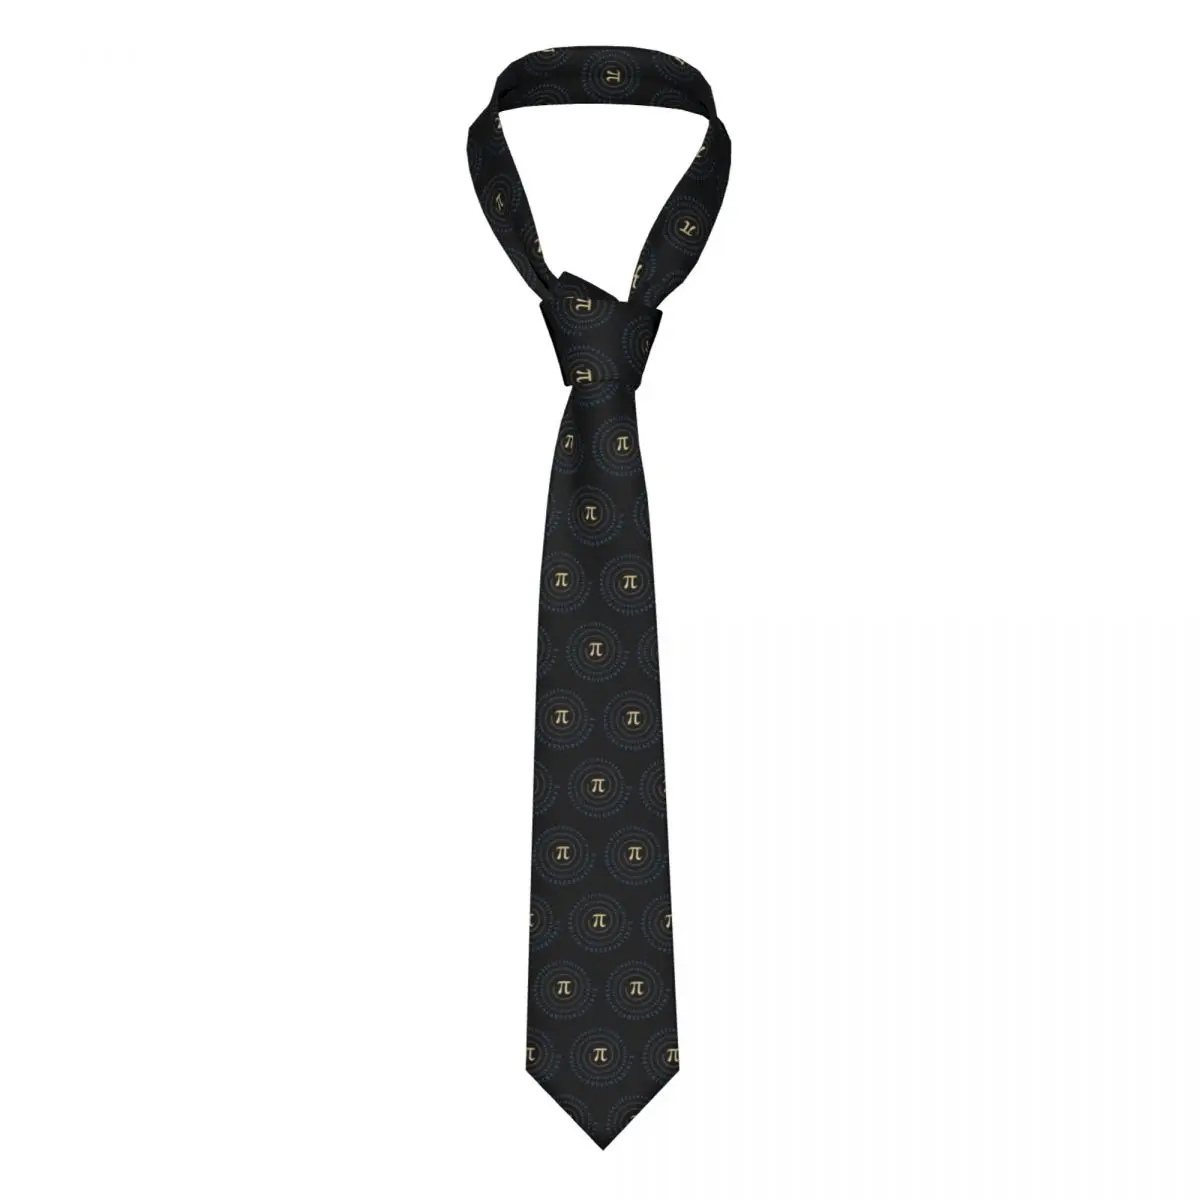 

Spiral Science Mathematics Math Irrational Number Sequence Tie Ties 3D Printed Cravat Wedding Necktie Narrow 8cm Wide